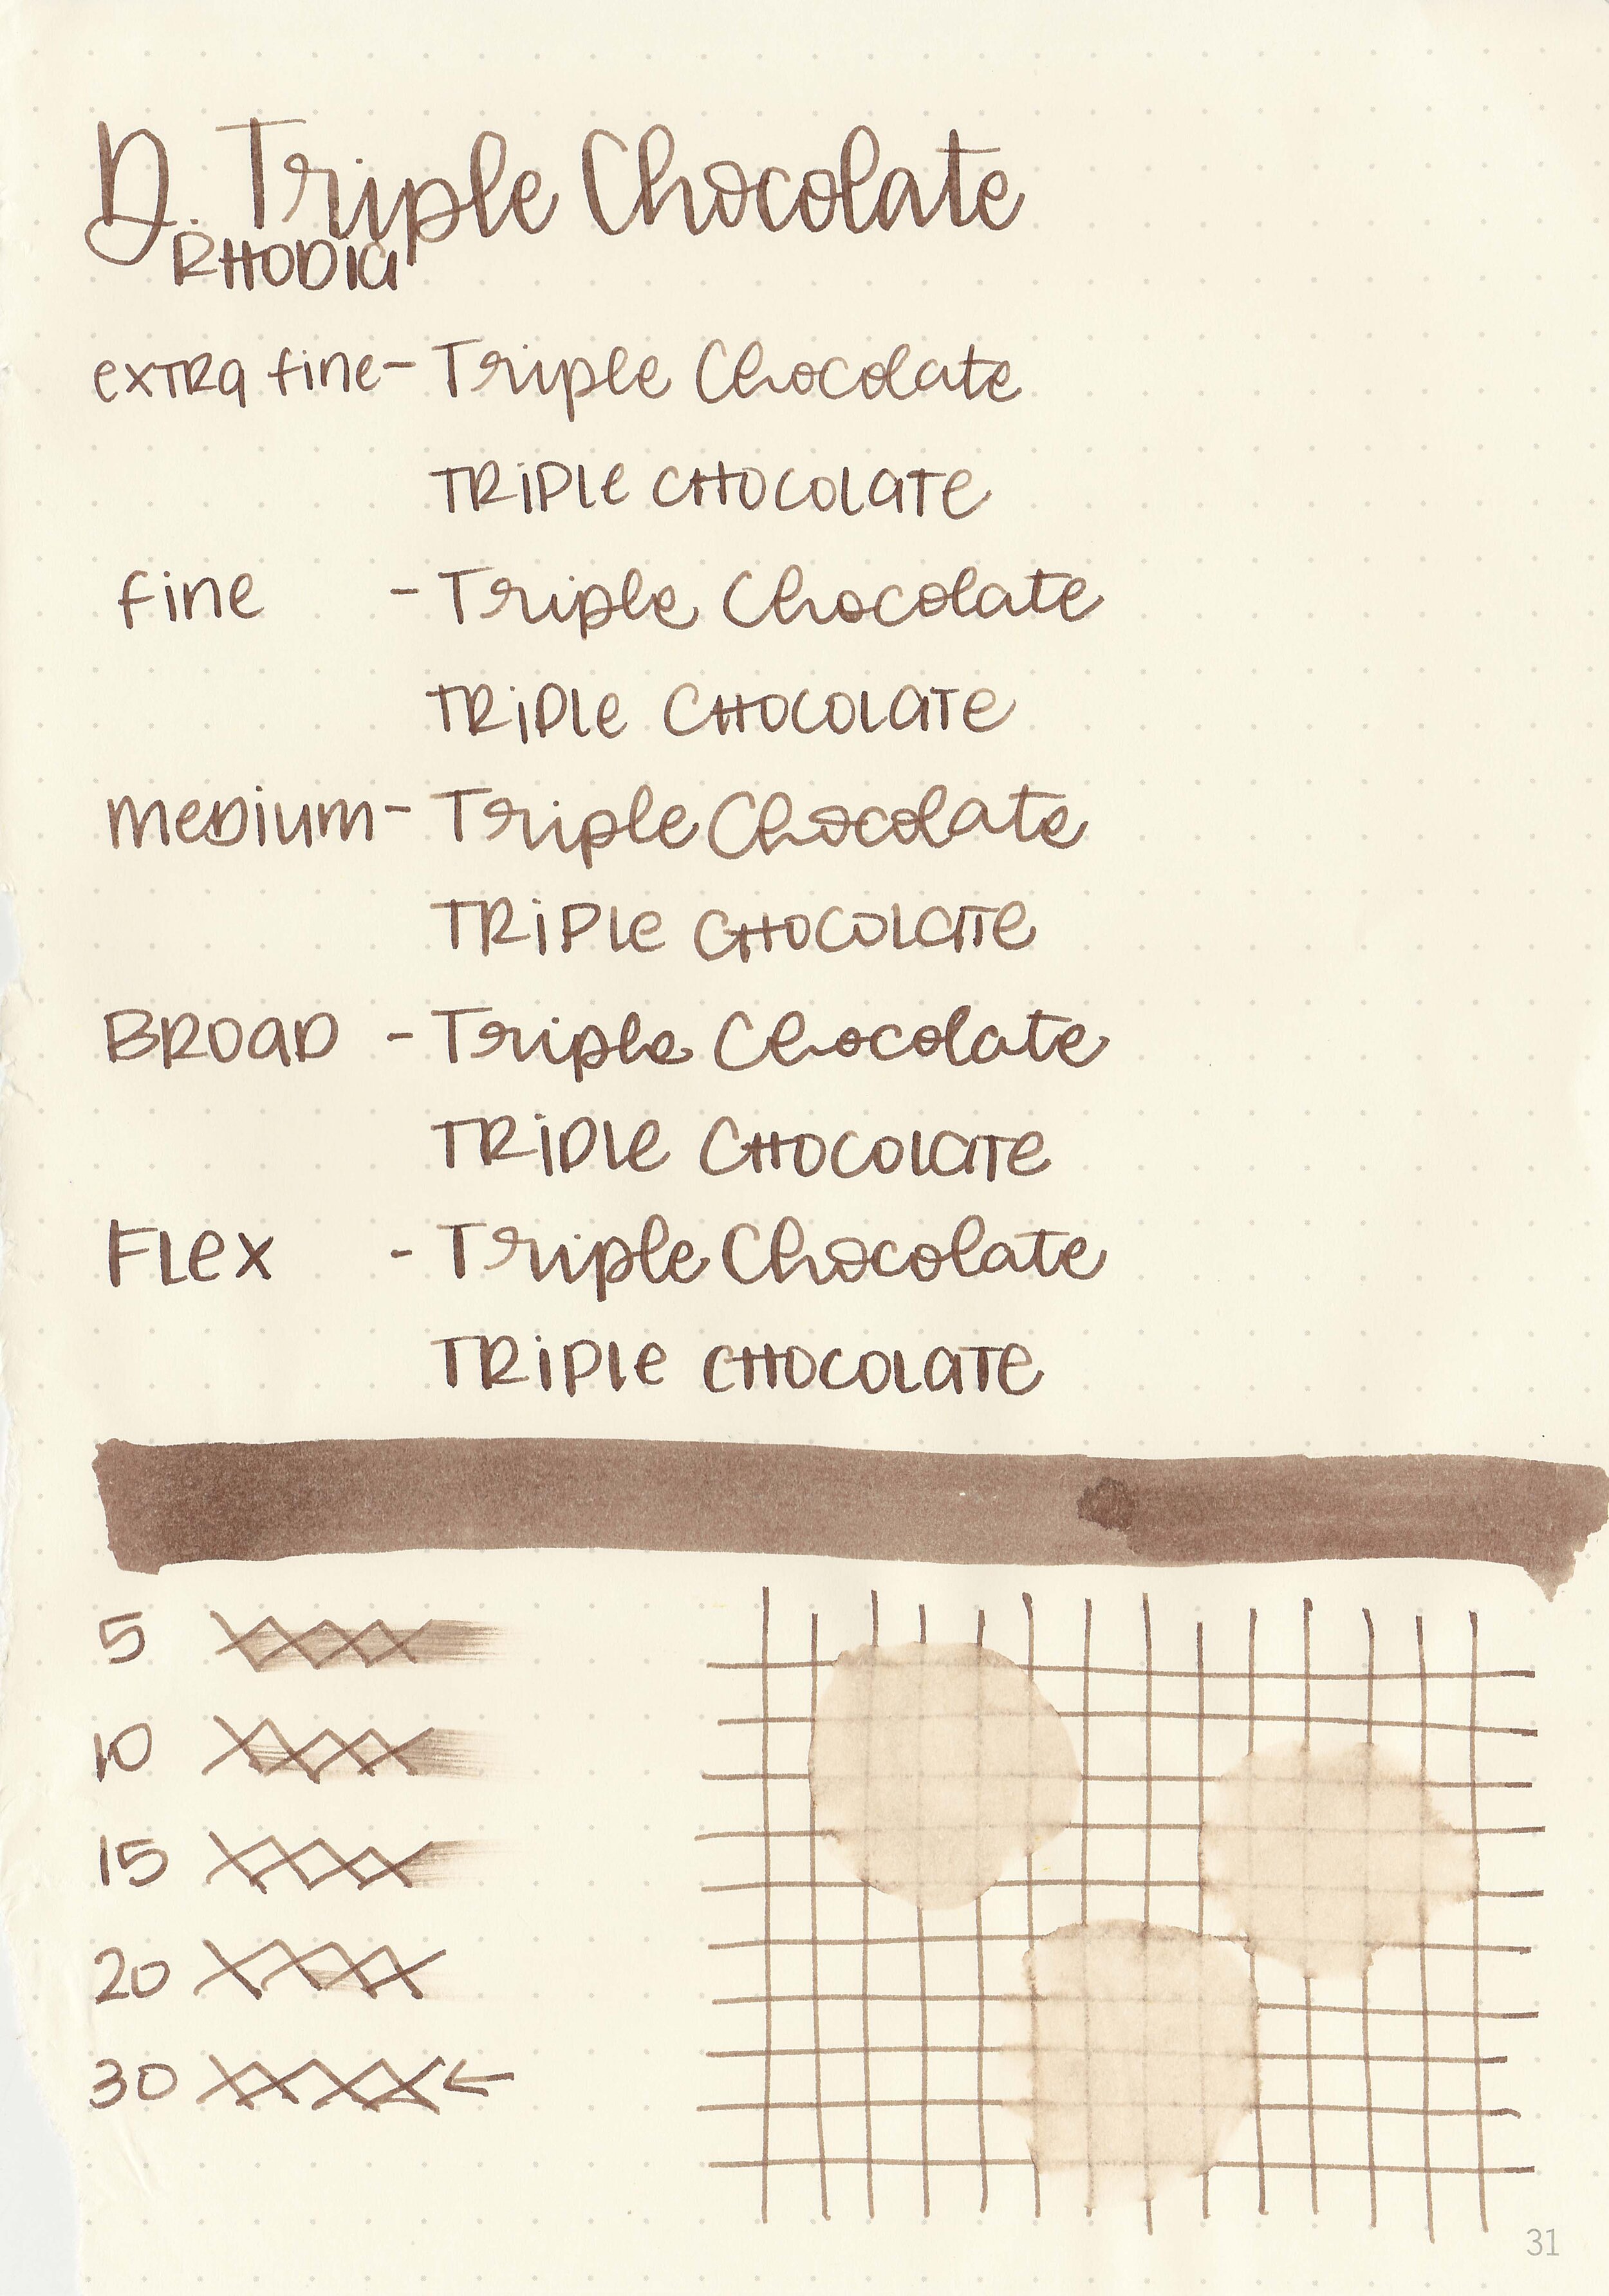 d-triple-chocolate-5.jpg